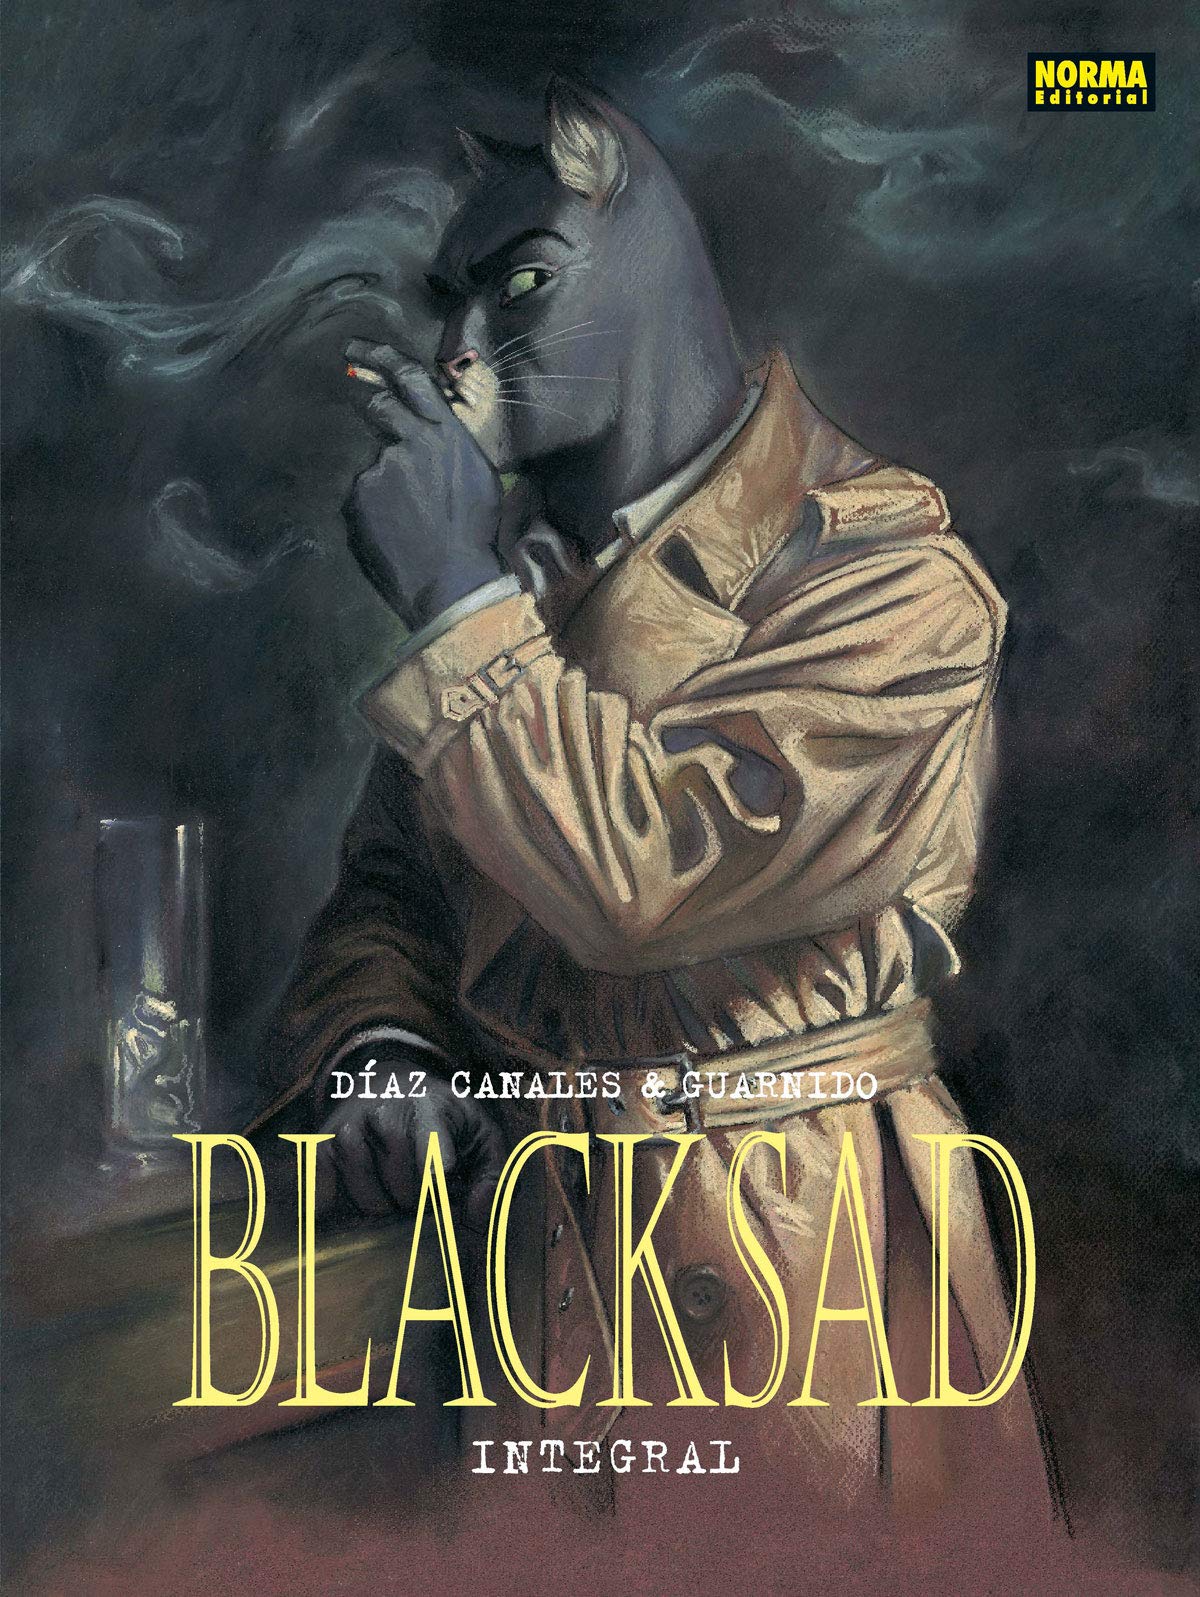 Comic completo Blacksad